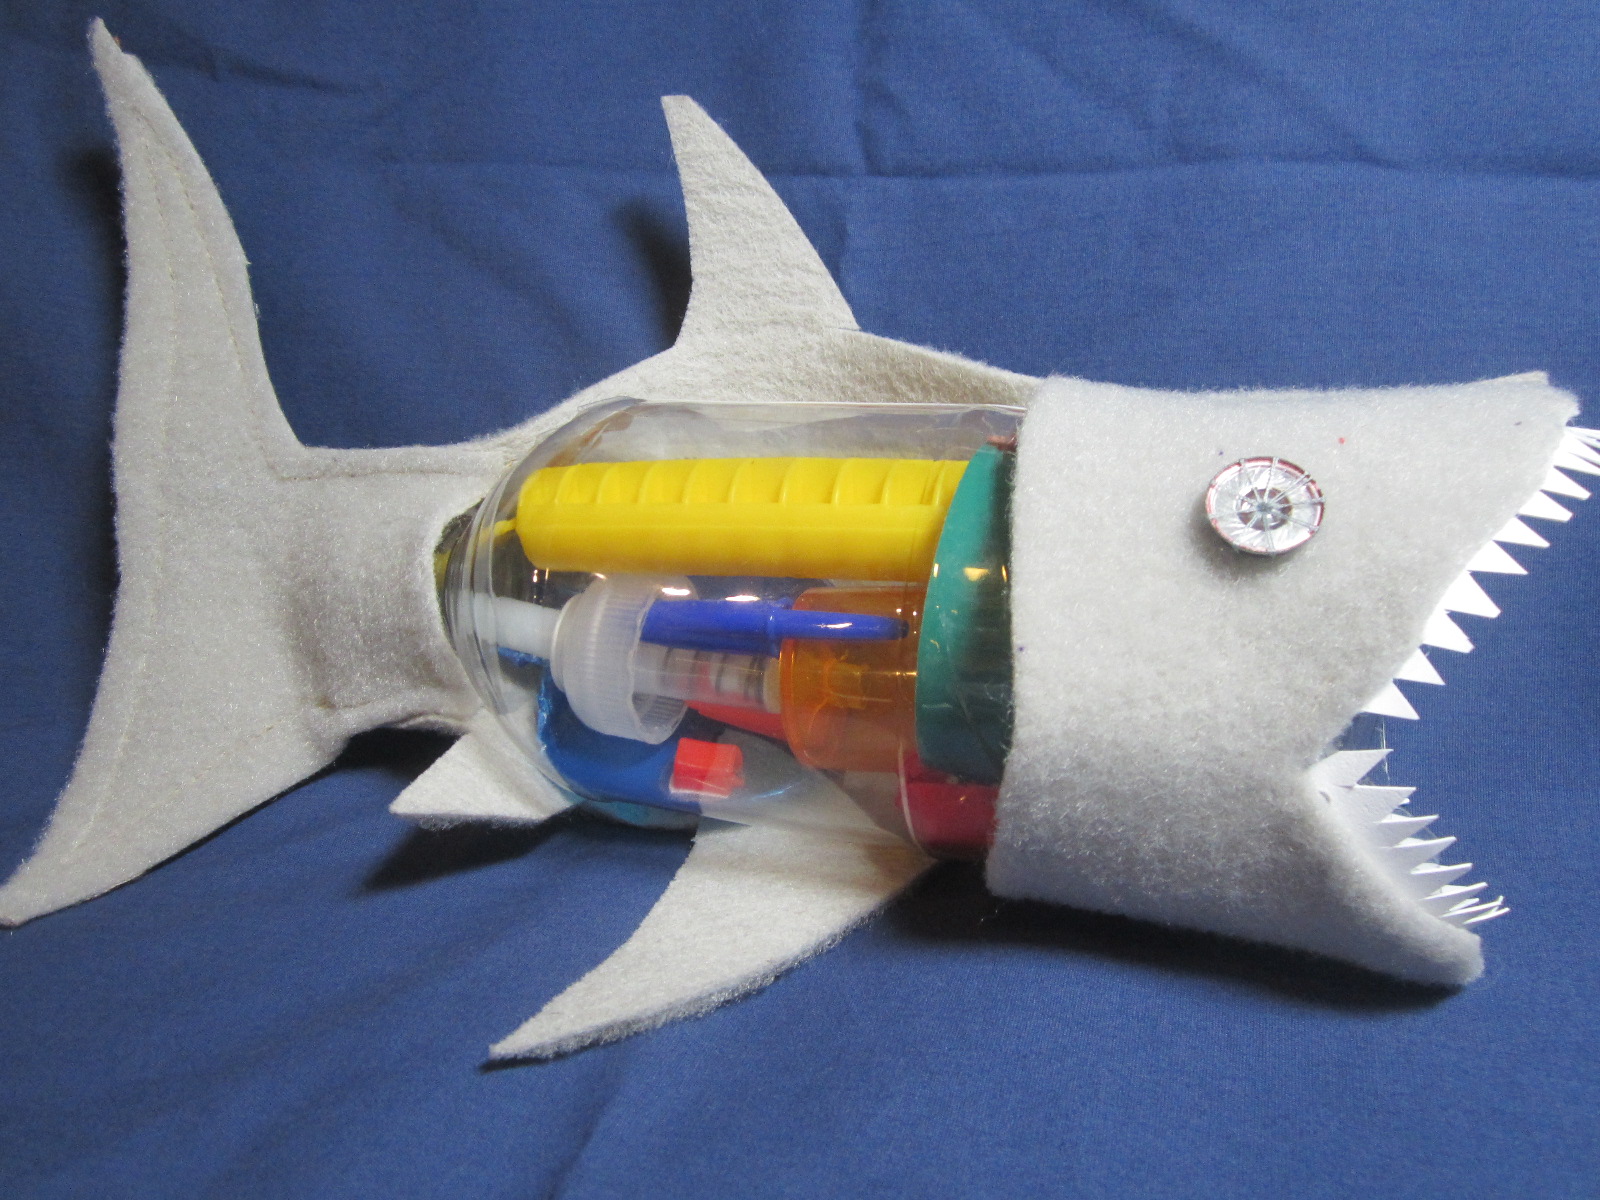 Shark anatomy model made from trash